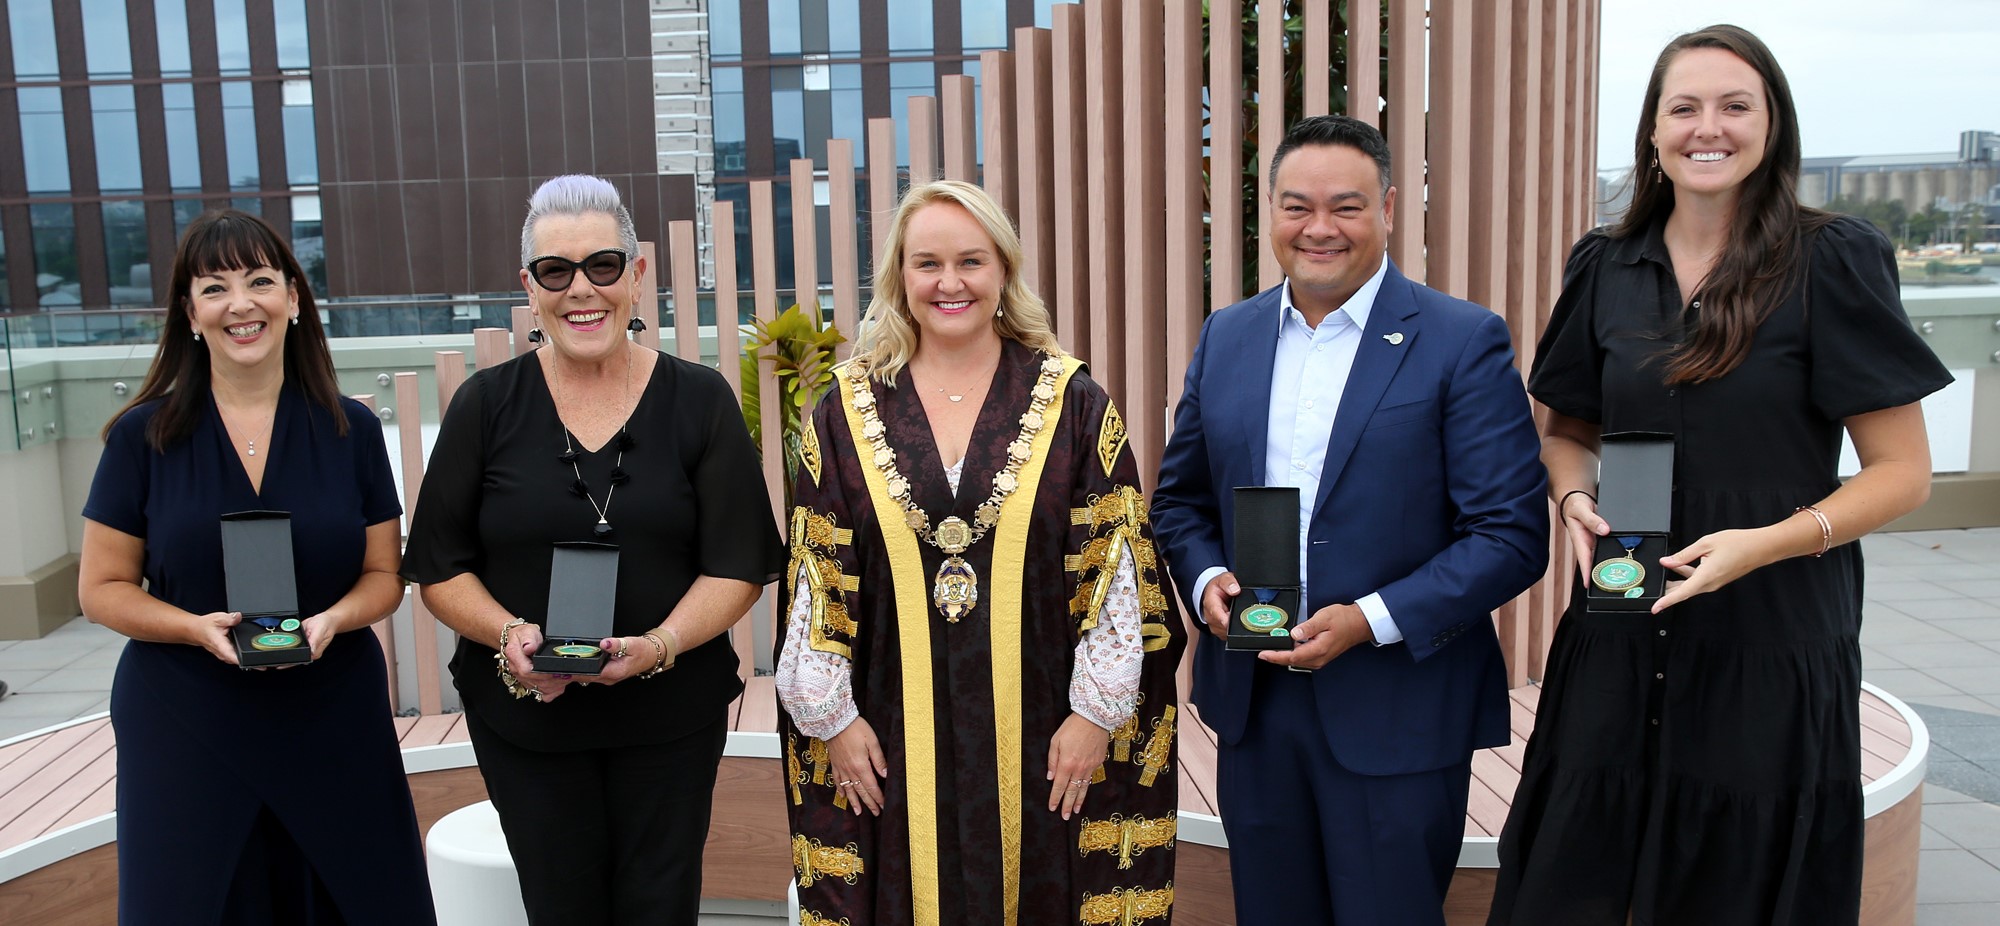 Lord-Mayor-Nuatali-Nelmes-with-City-of-Newcastle-s-2021-Citizenship-Award-recipients-web-1.jpg